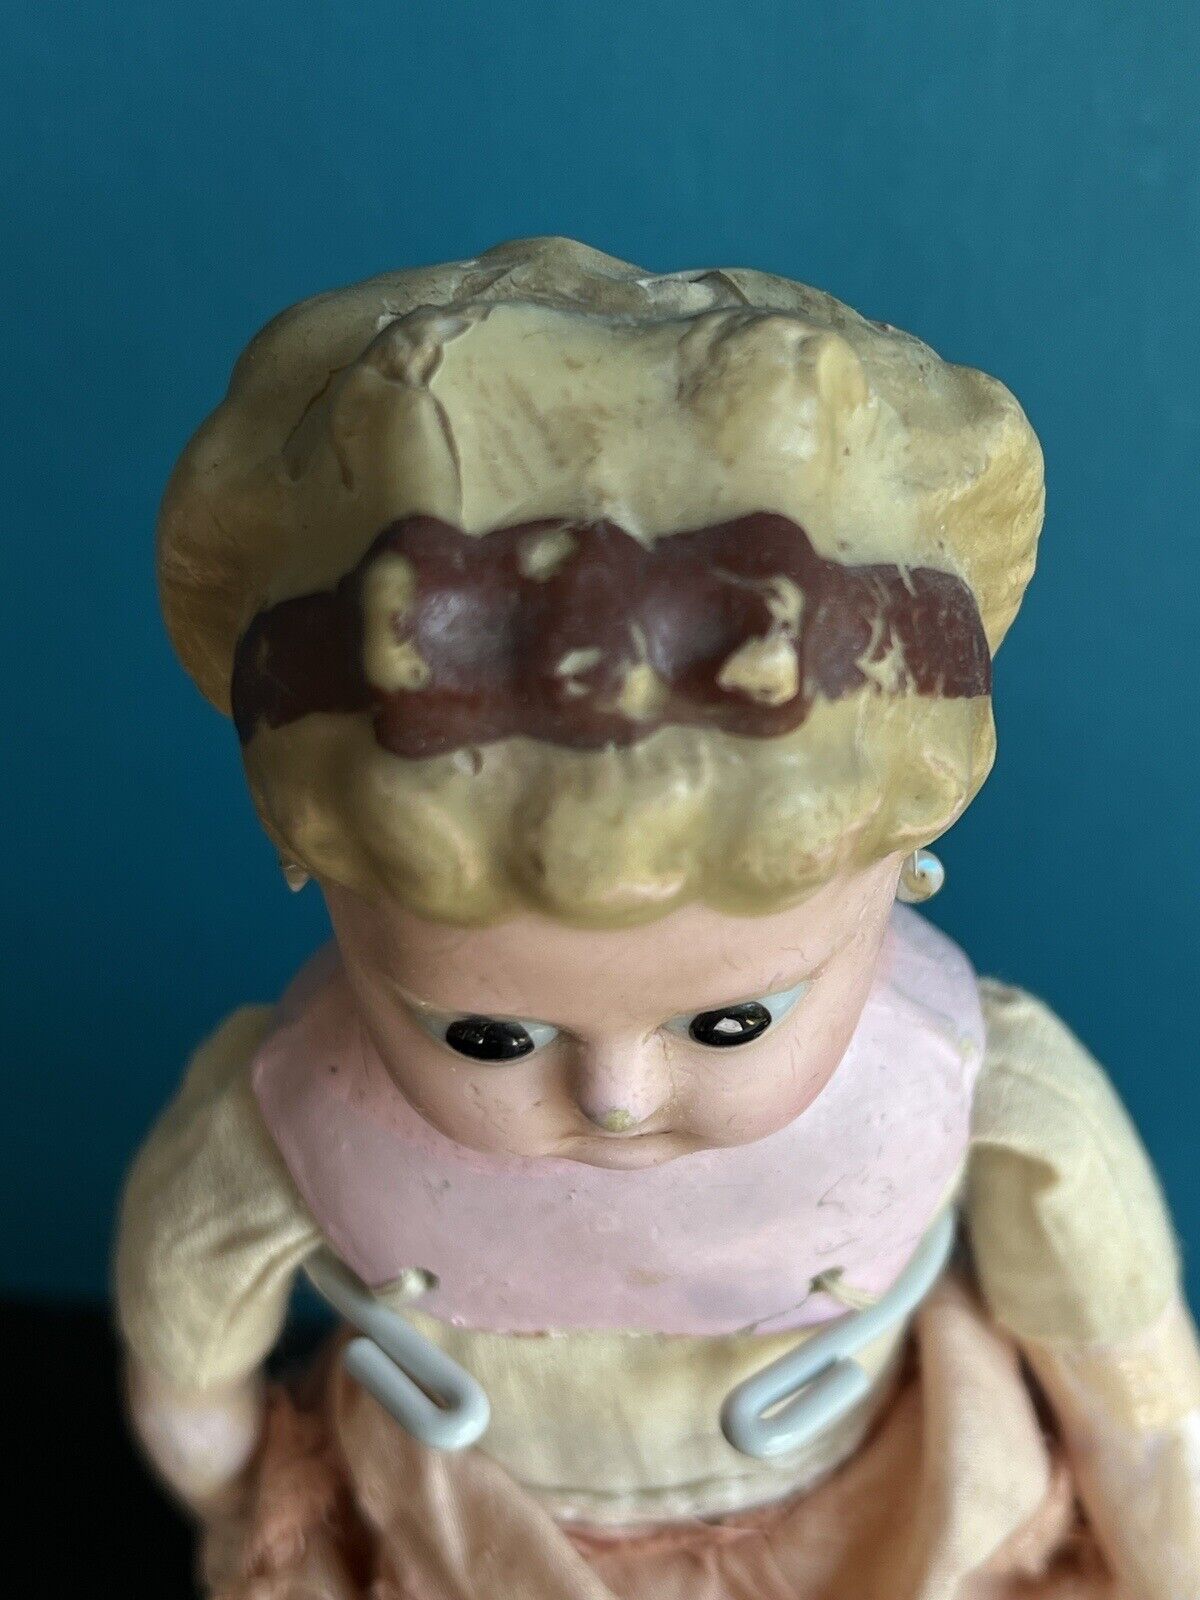 Antique German 13.5” Wax Over Papier Mache Pumpkin Head Pierced Ears Doll